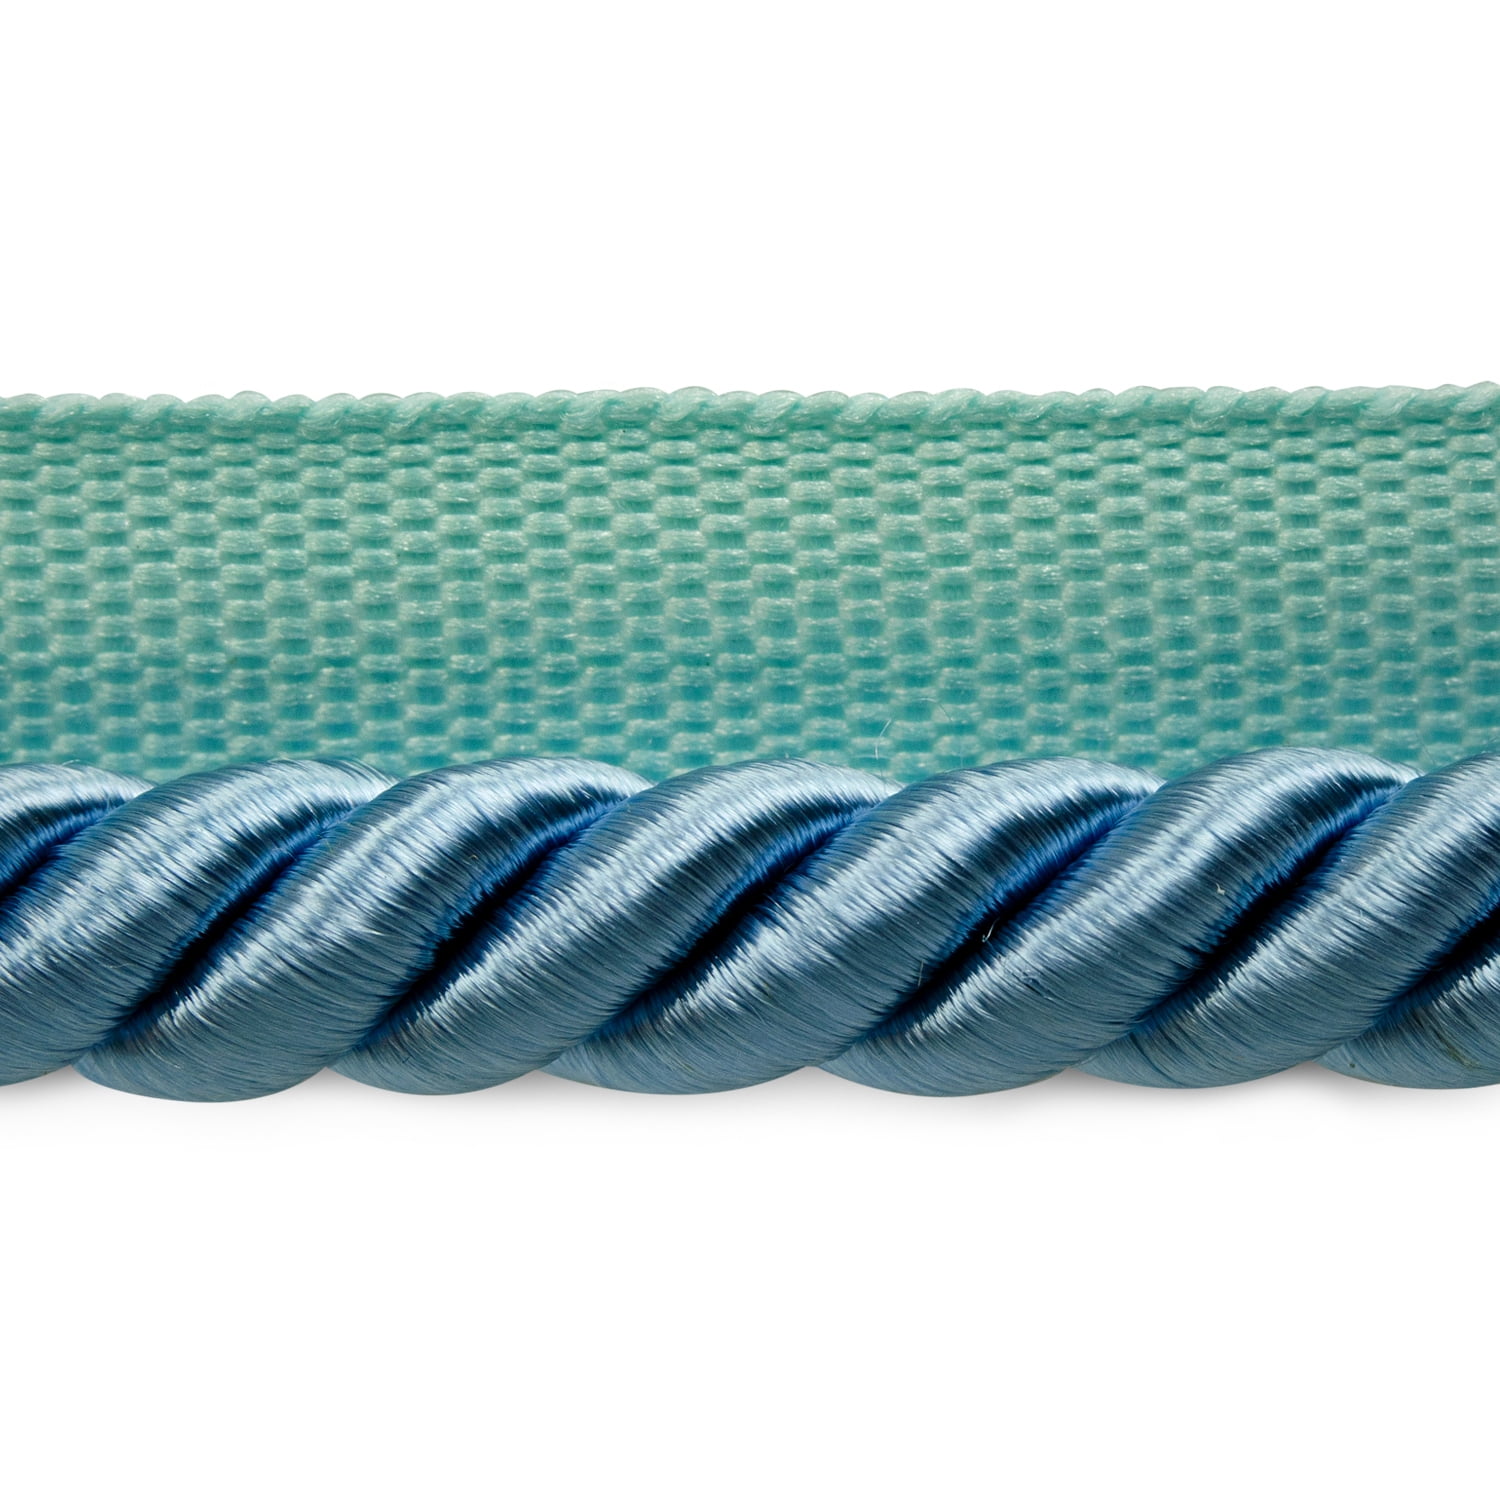 Lip Cord Trim Satin Shiny Piping Cording Cord edge 1/8 WHITE - 11